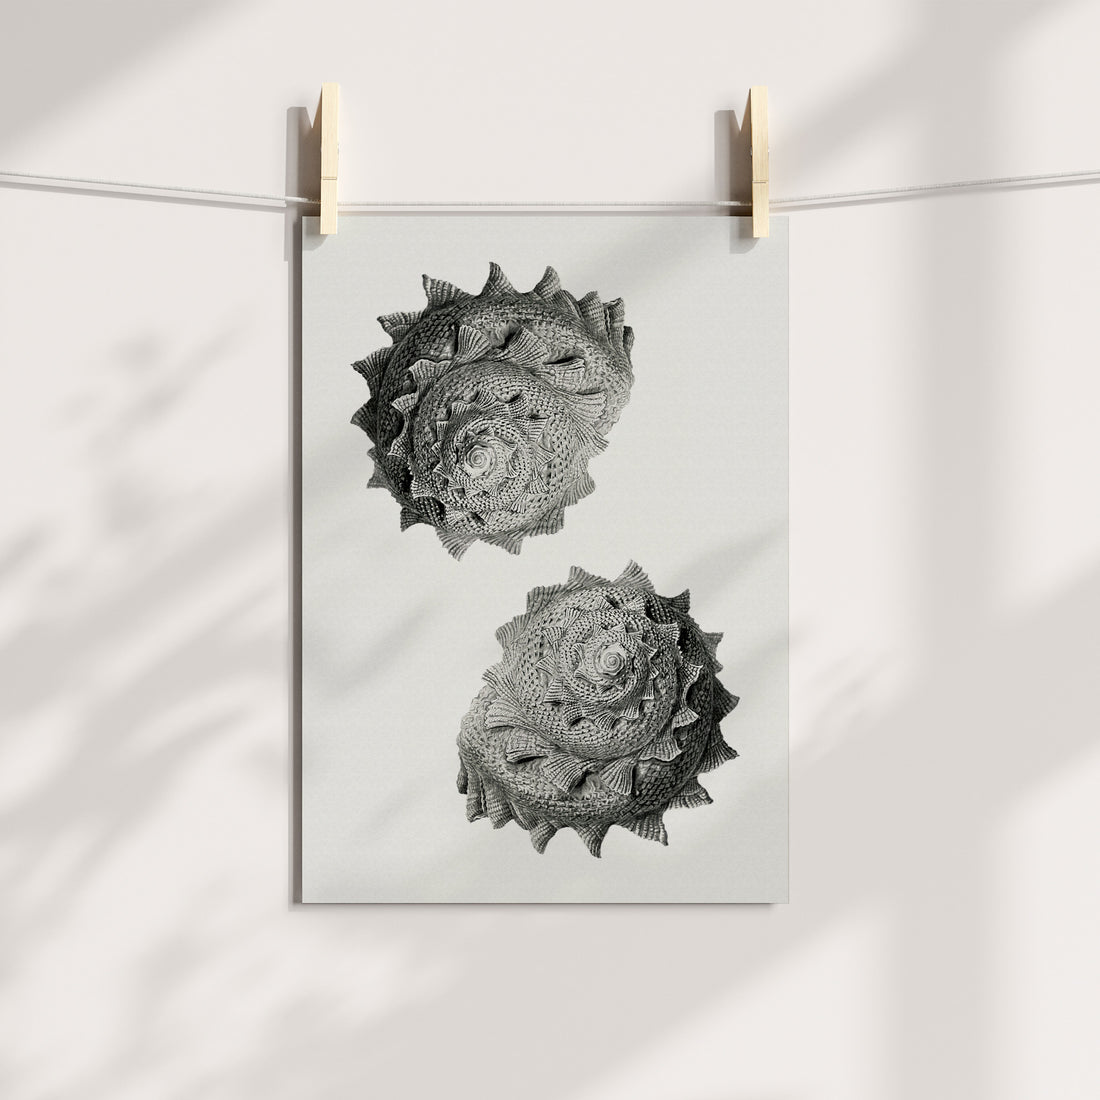 Mirrored Spiral Shells: Textured Symmetry Printable Art